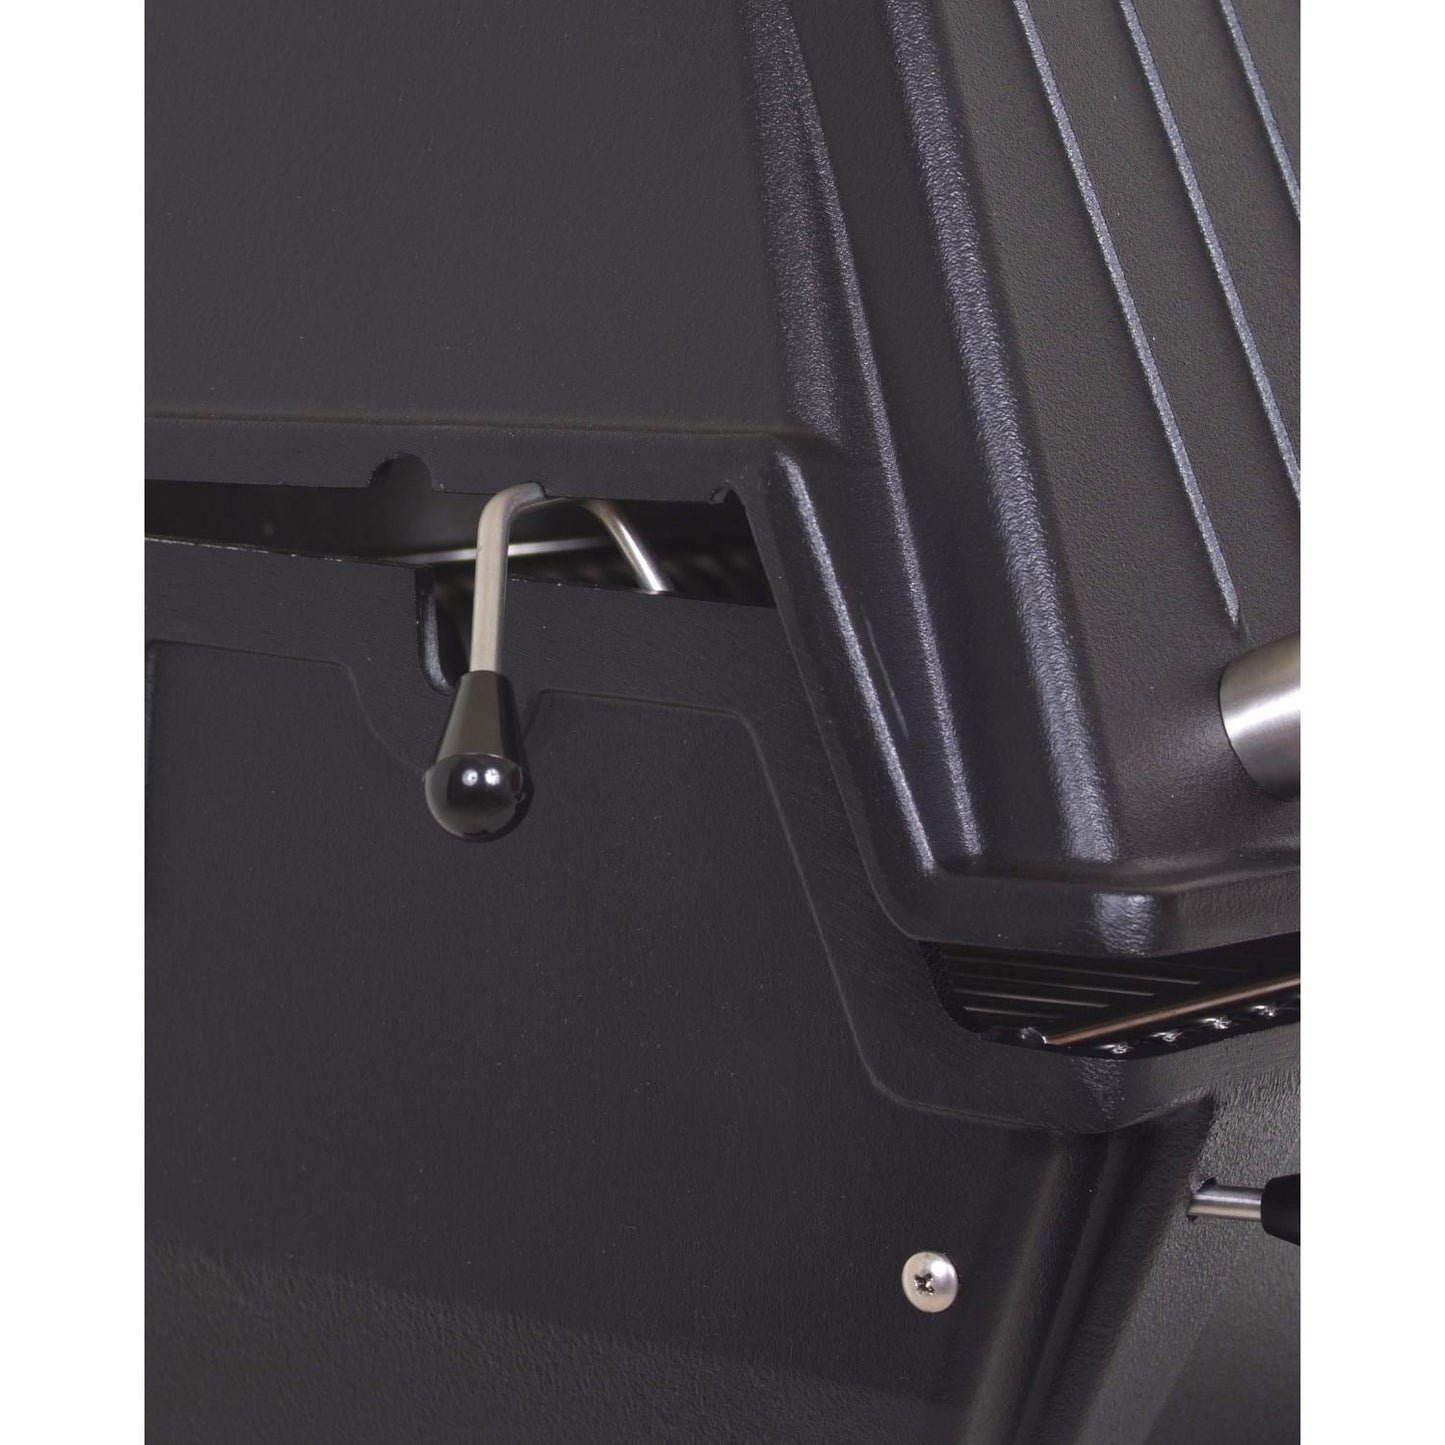 Broilmaster P3-XF Premium Propane Gas Grill On Black Cart